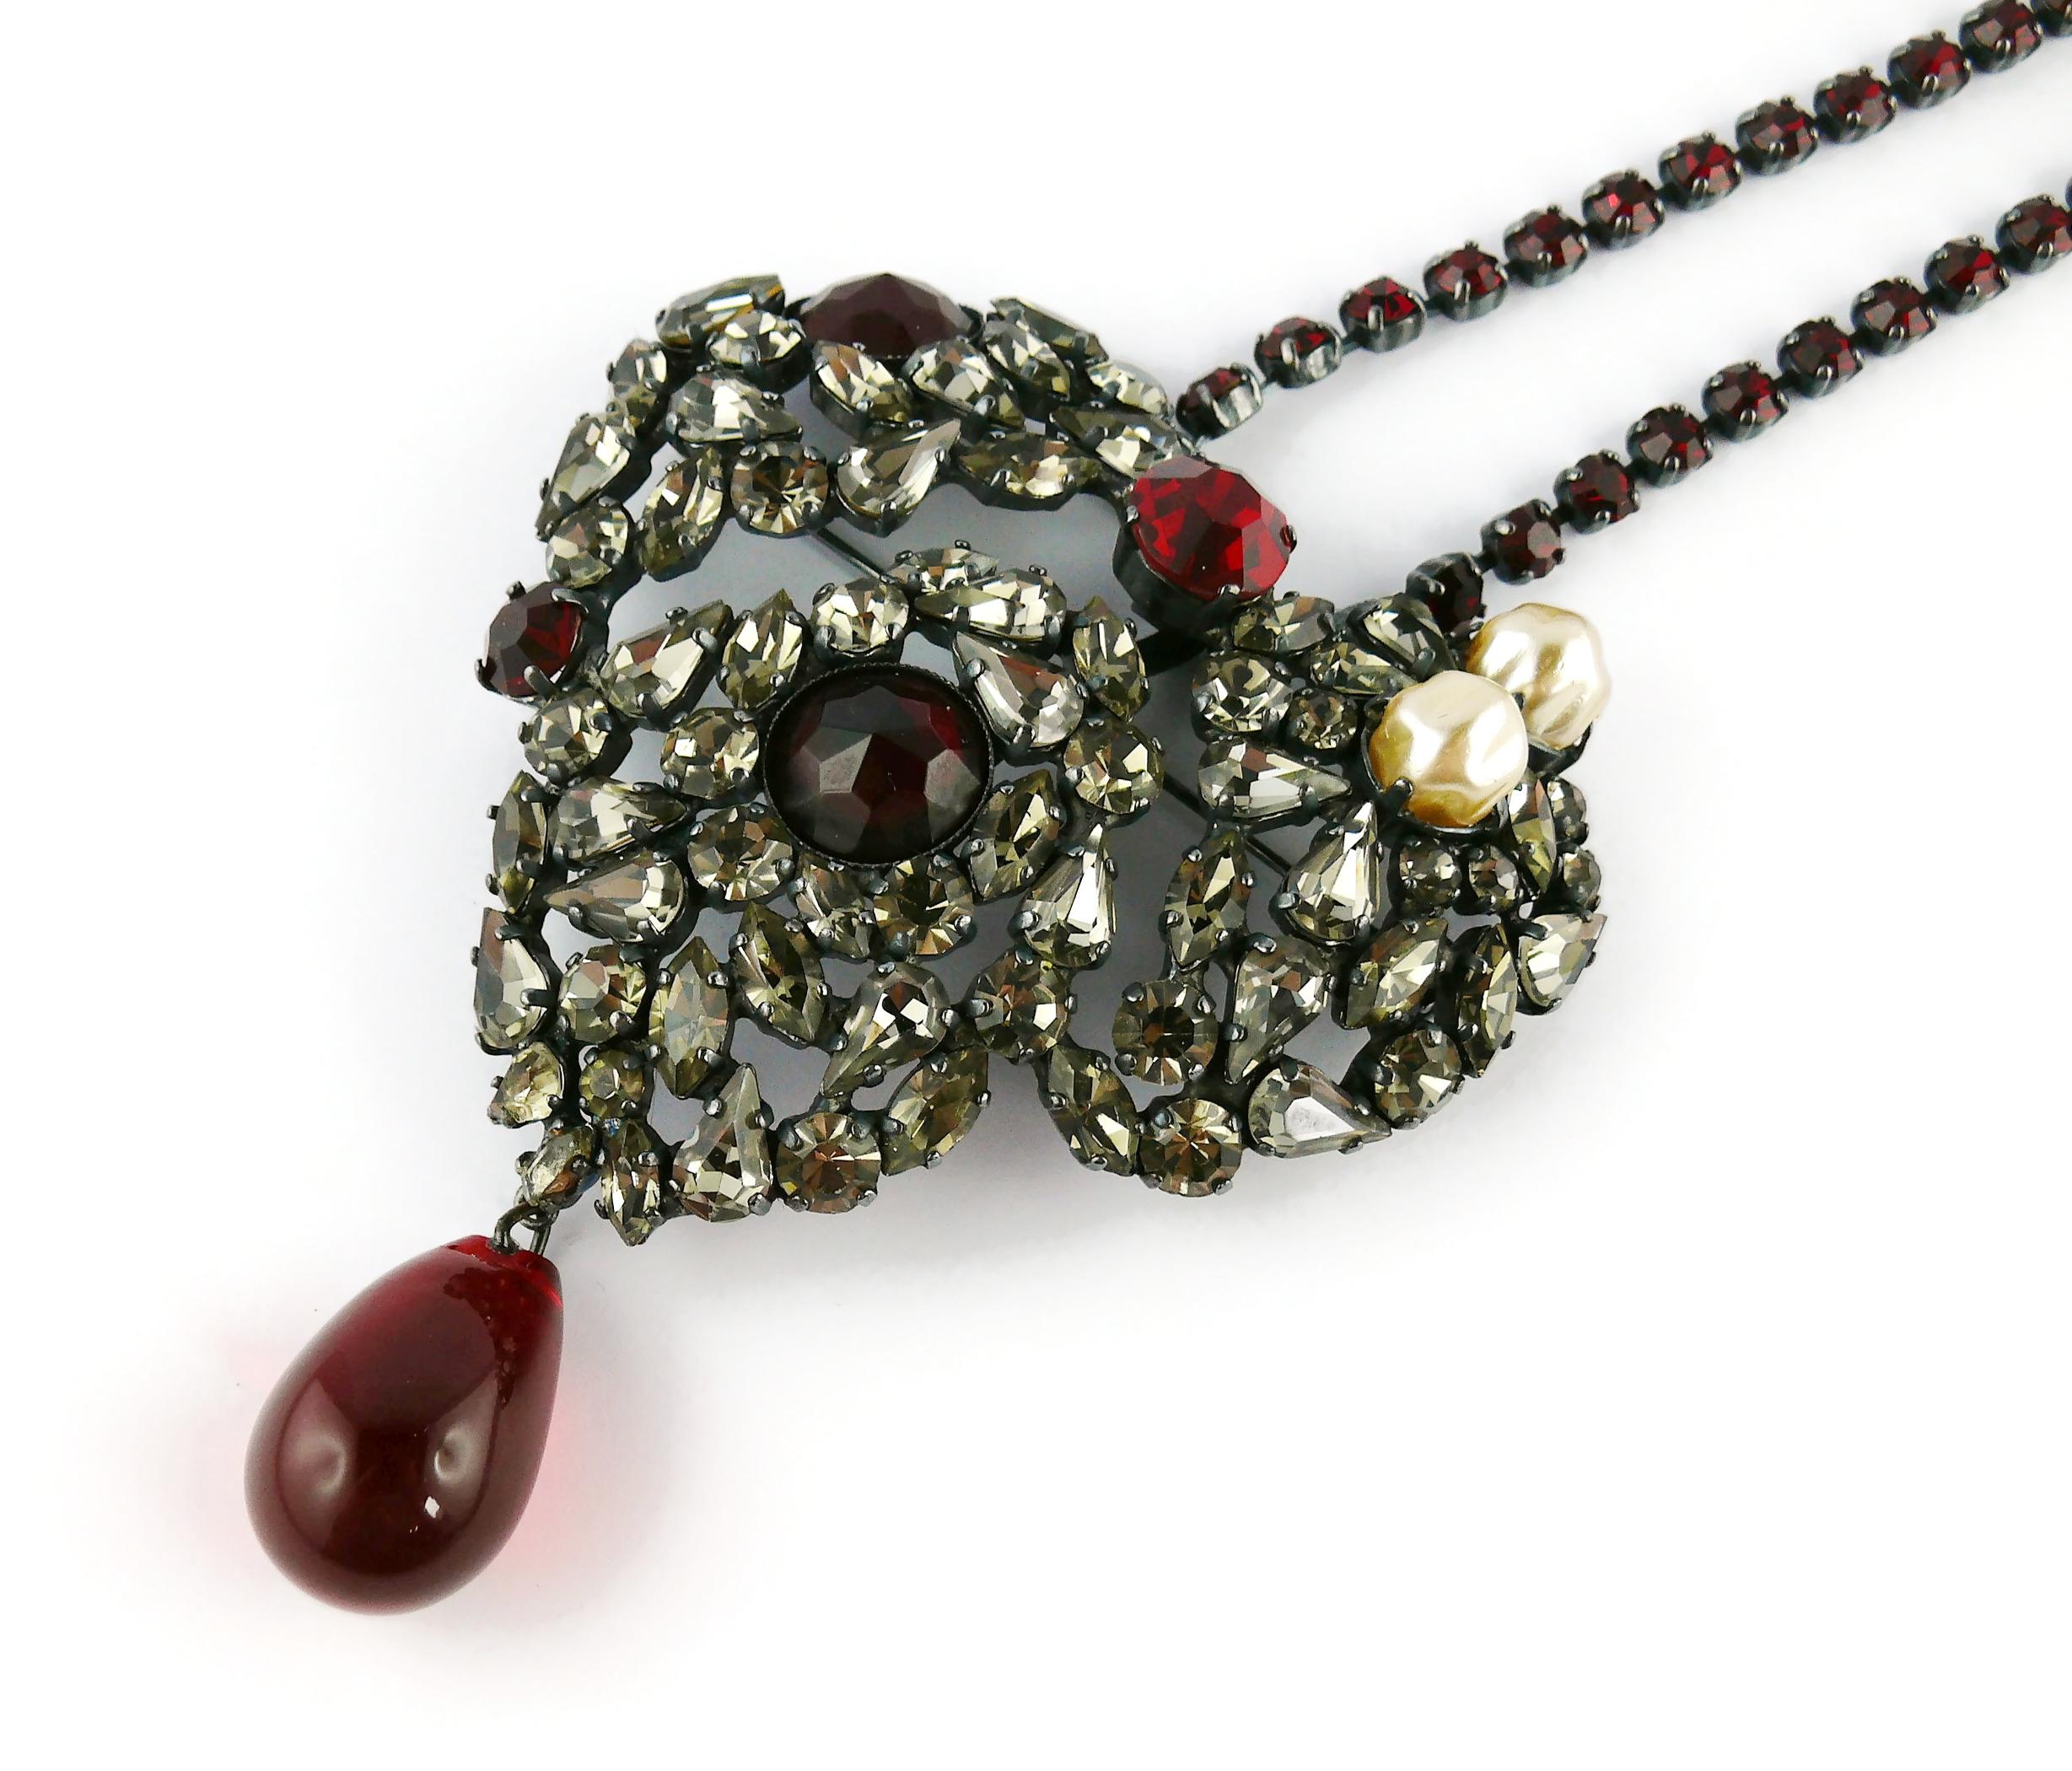 Yves Saint Laurent Vintage Massive Iconic Bejeweled Heart Brooch Necklace 1